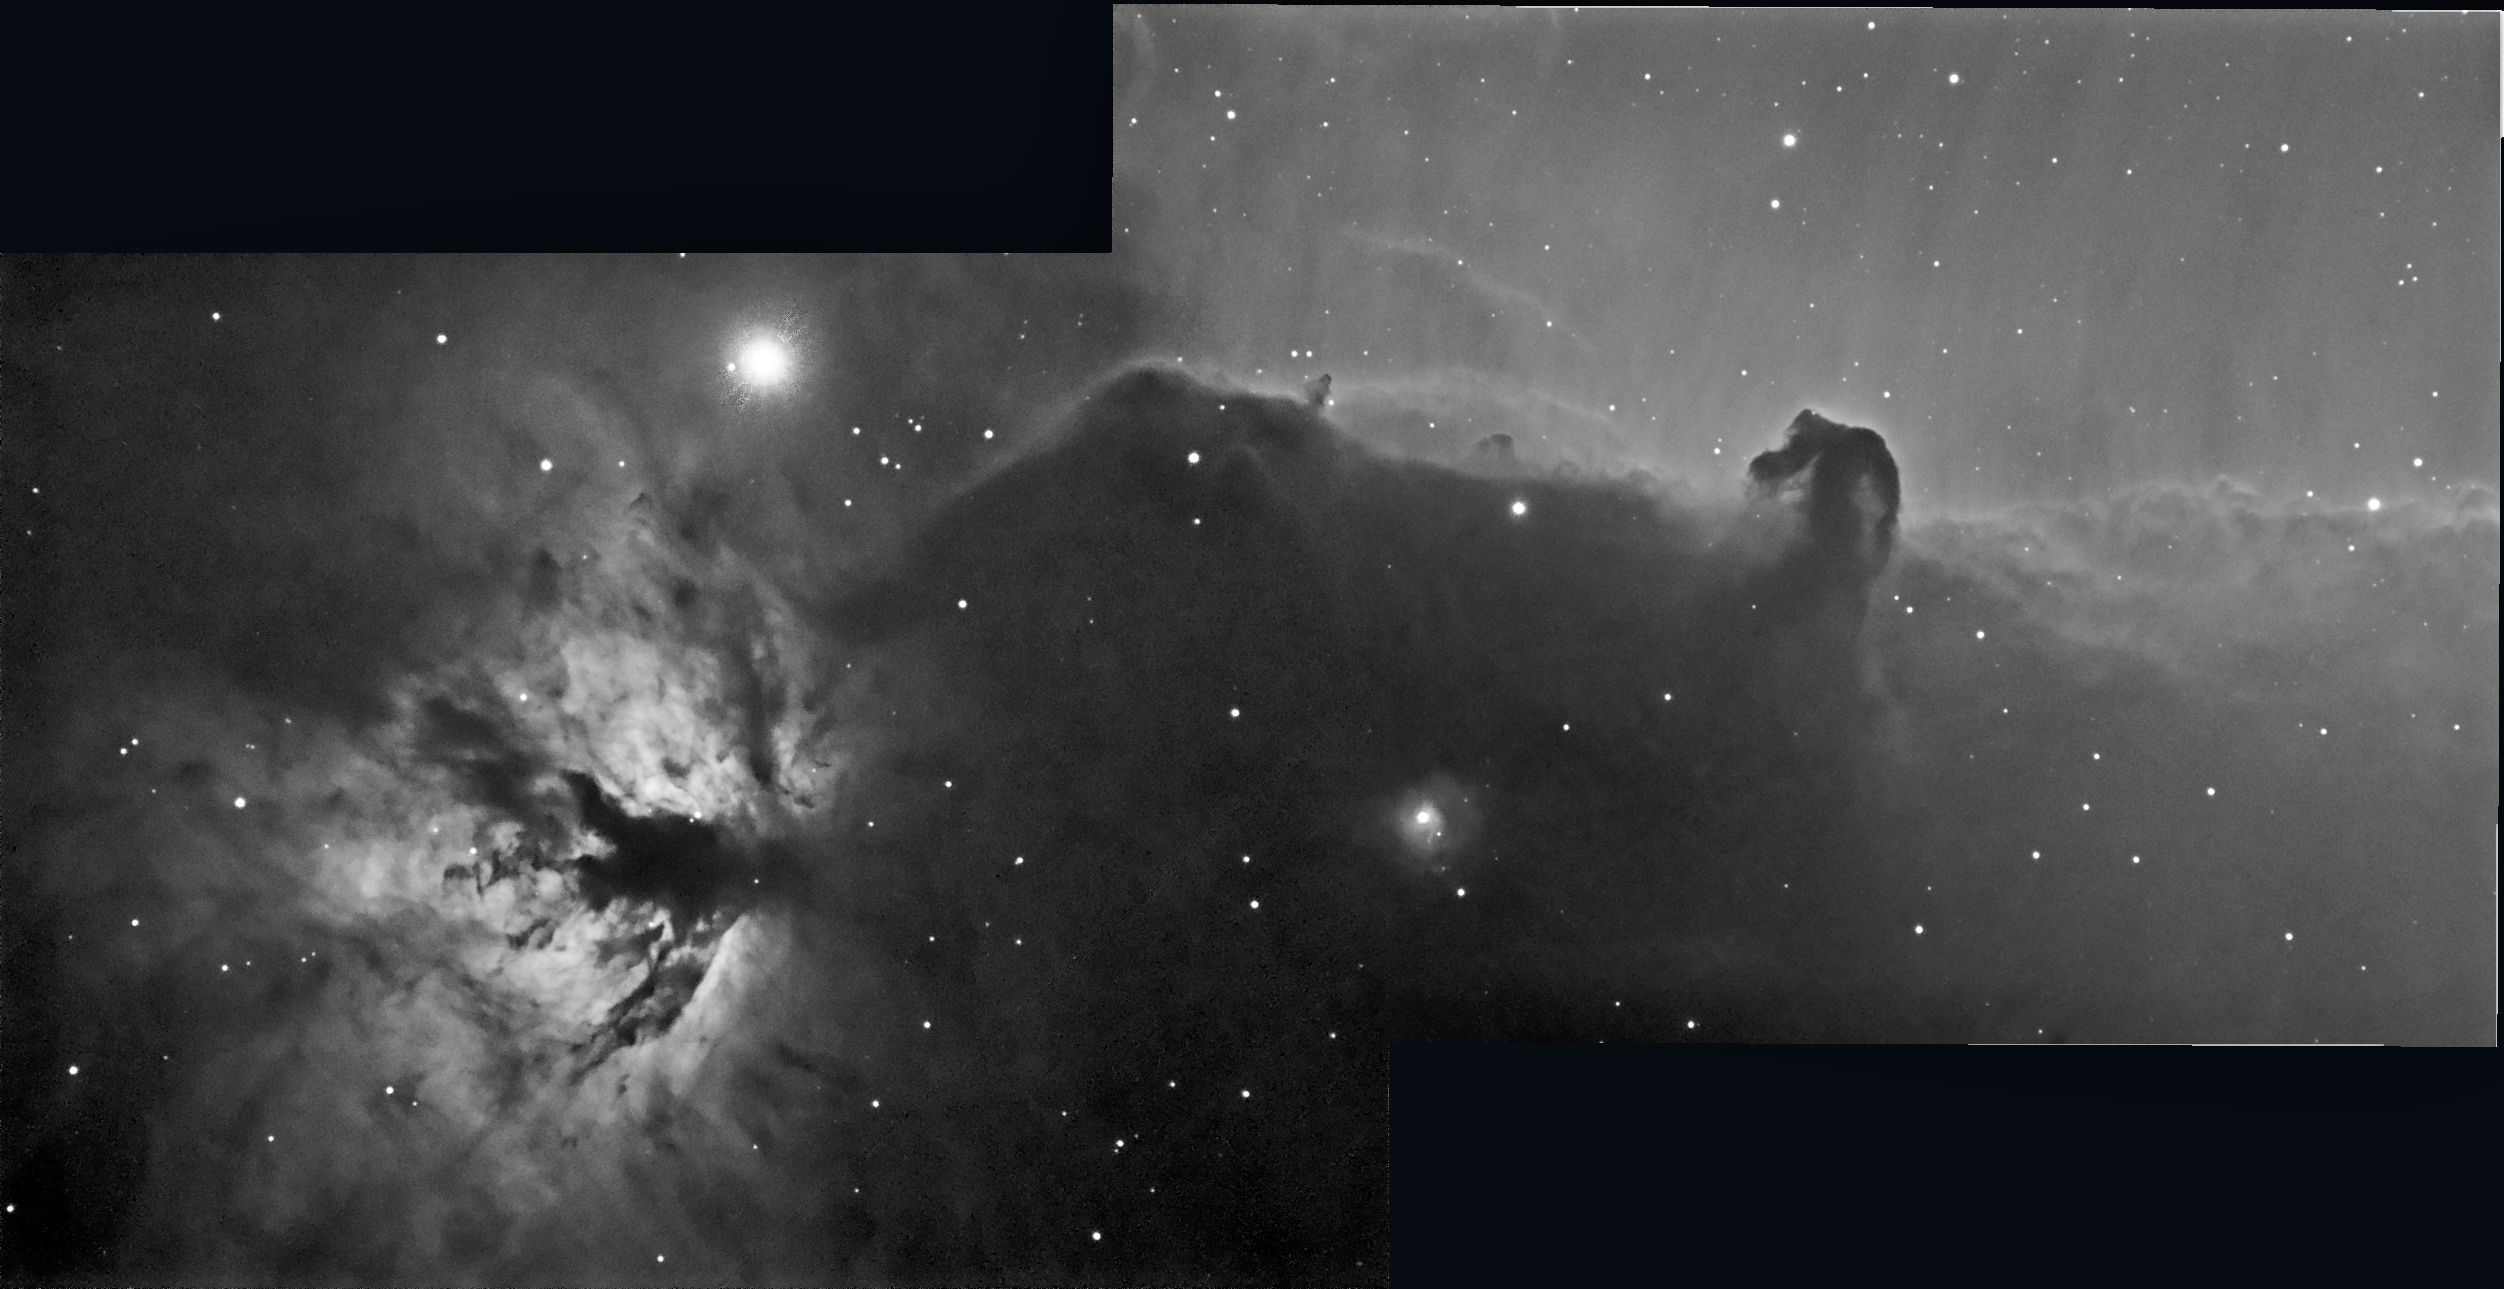 Flame and horsehead nebulae